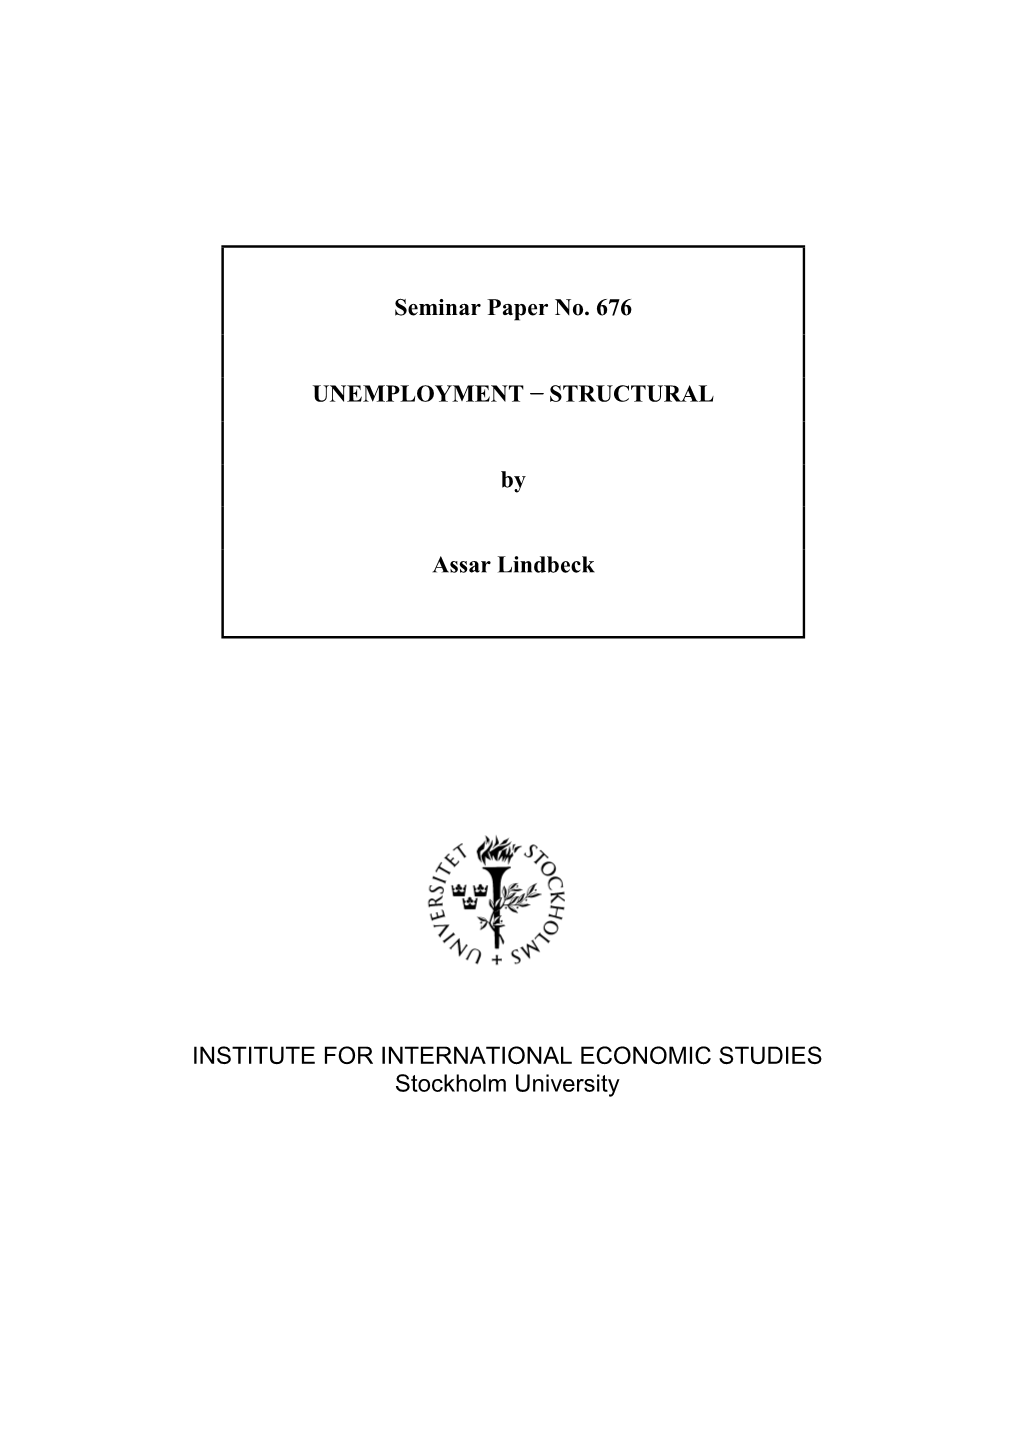 Seminar Paper No. 676 UNEMPLOYMENT